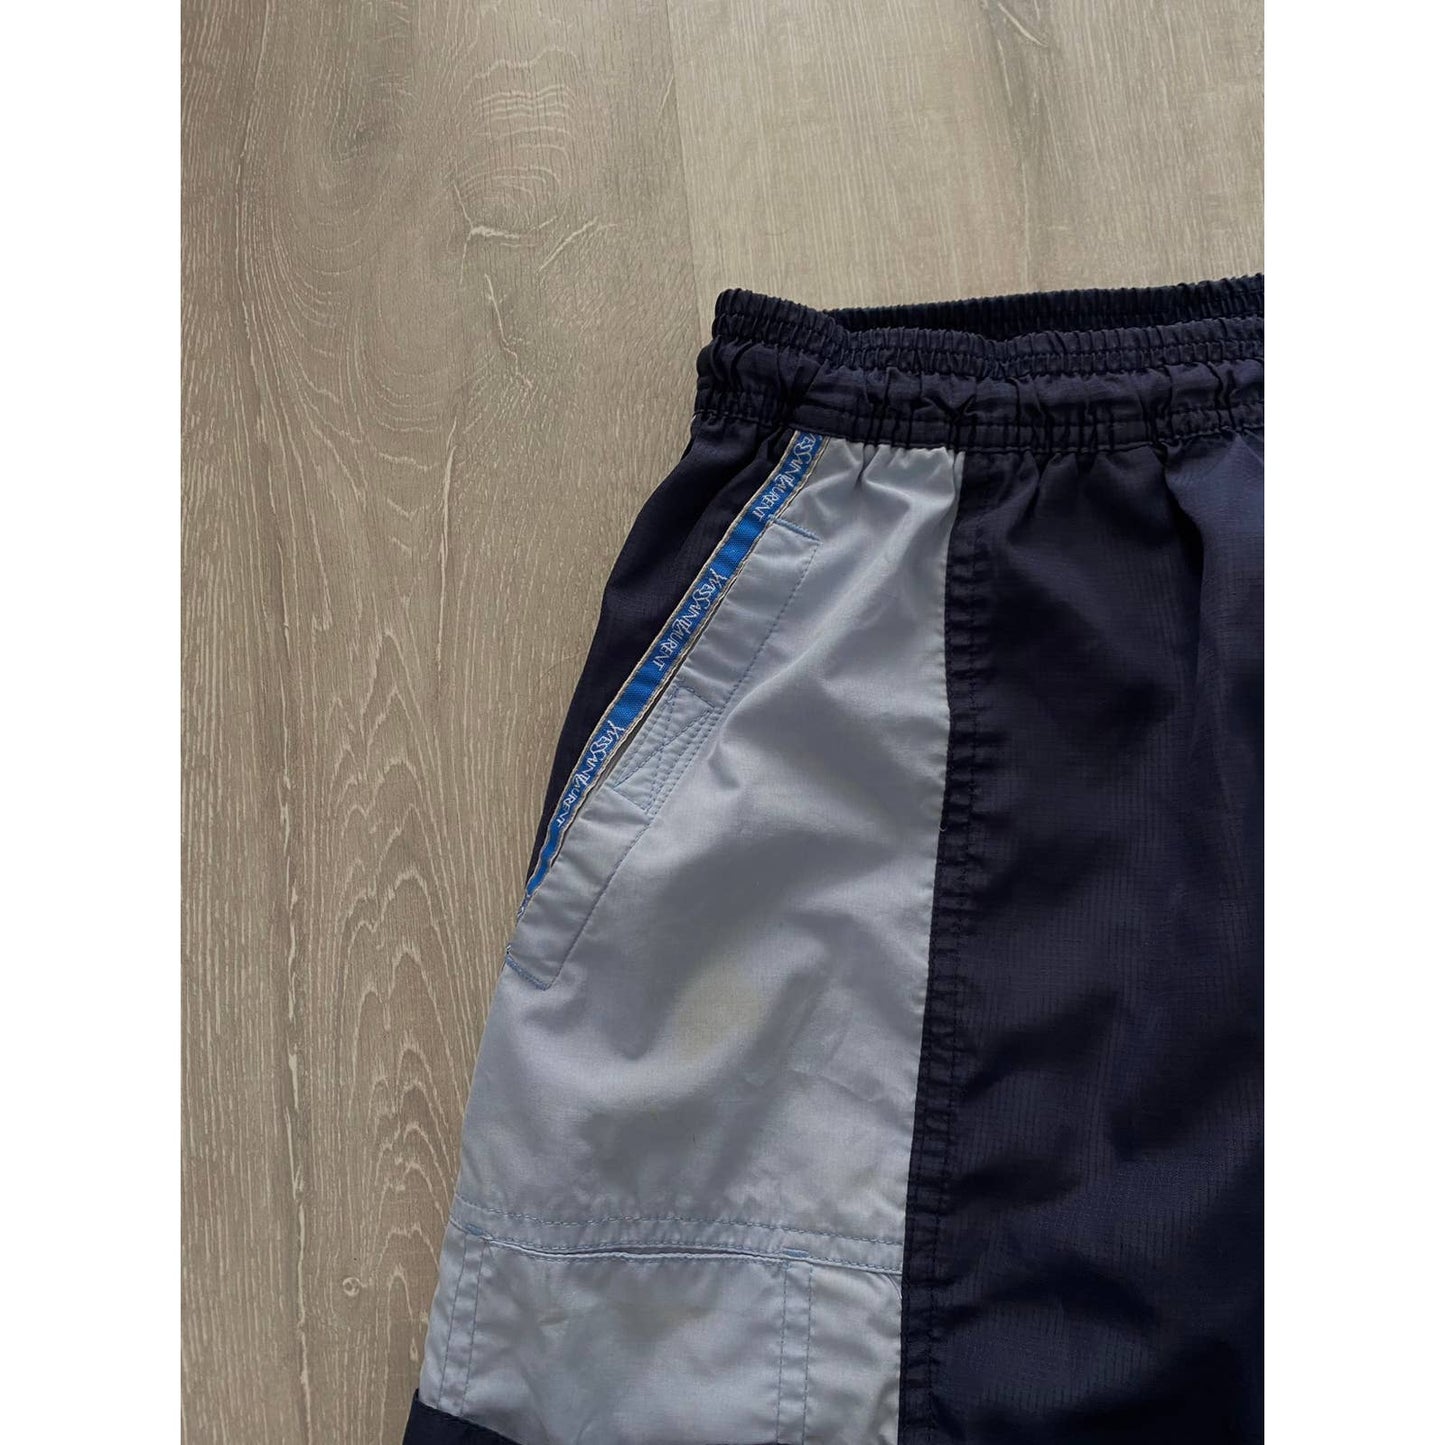 90s Yves Saint Laurent vintage navy shorts YSL